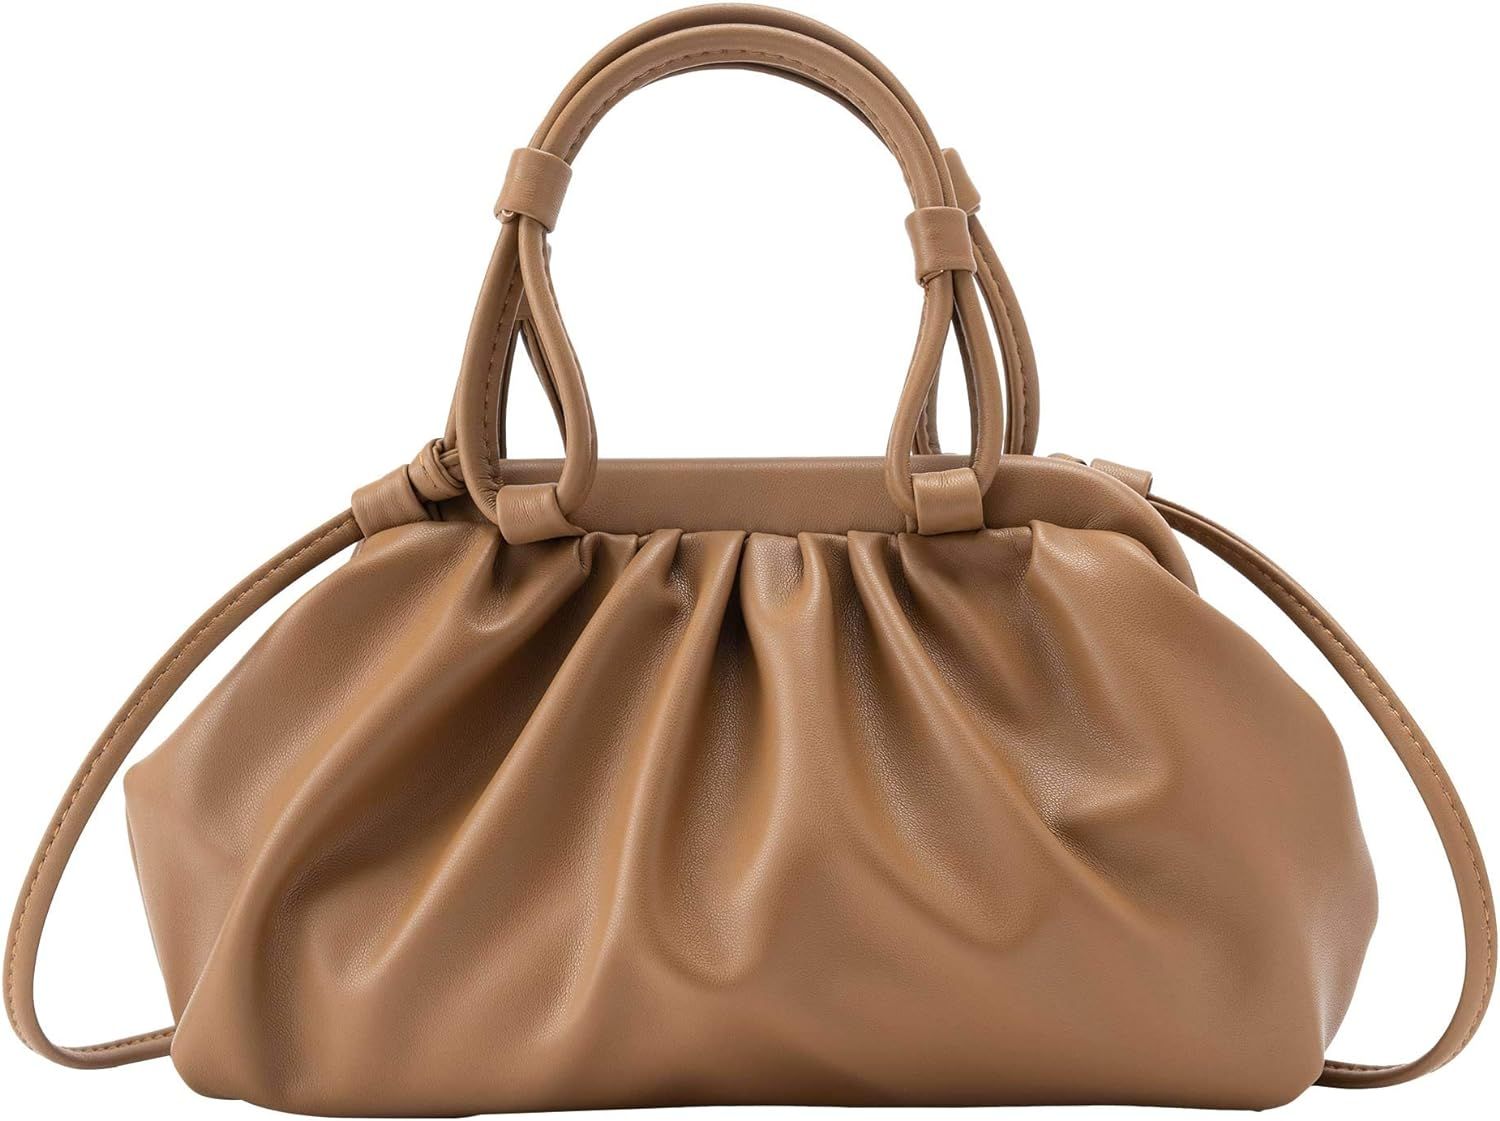 Cloud Clutch Purses and Dumpling Crossbody for Women - Fashion Small Evening Handbag | Amazon (US)